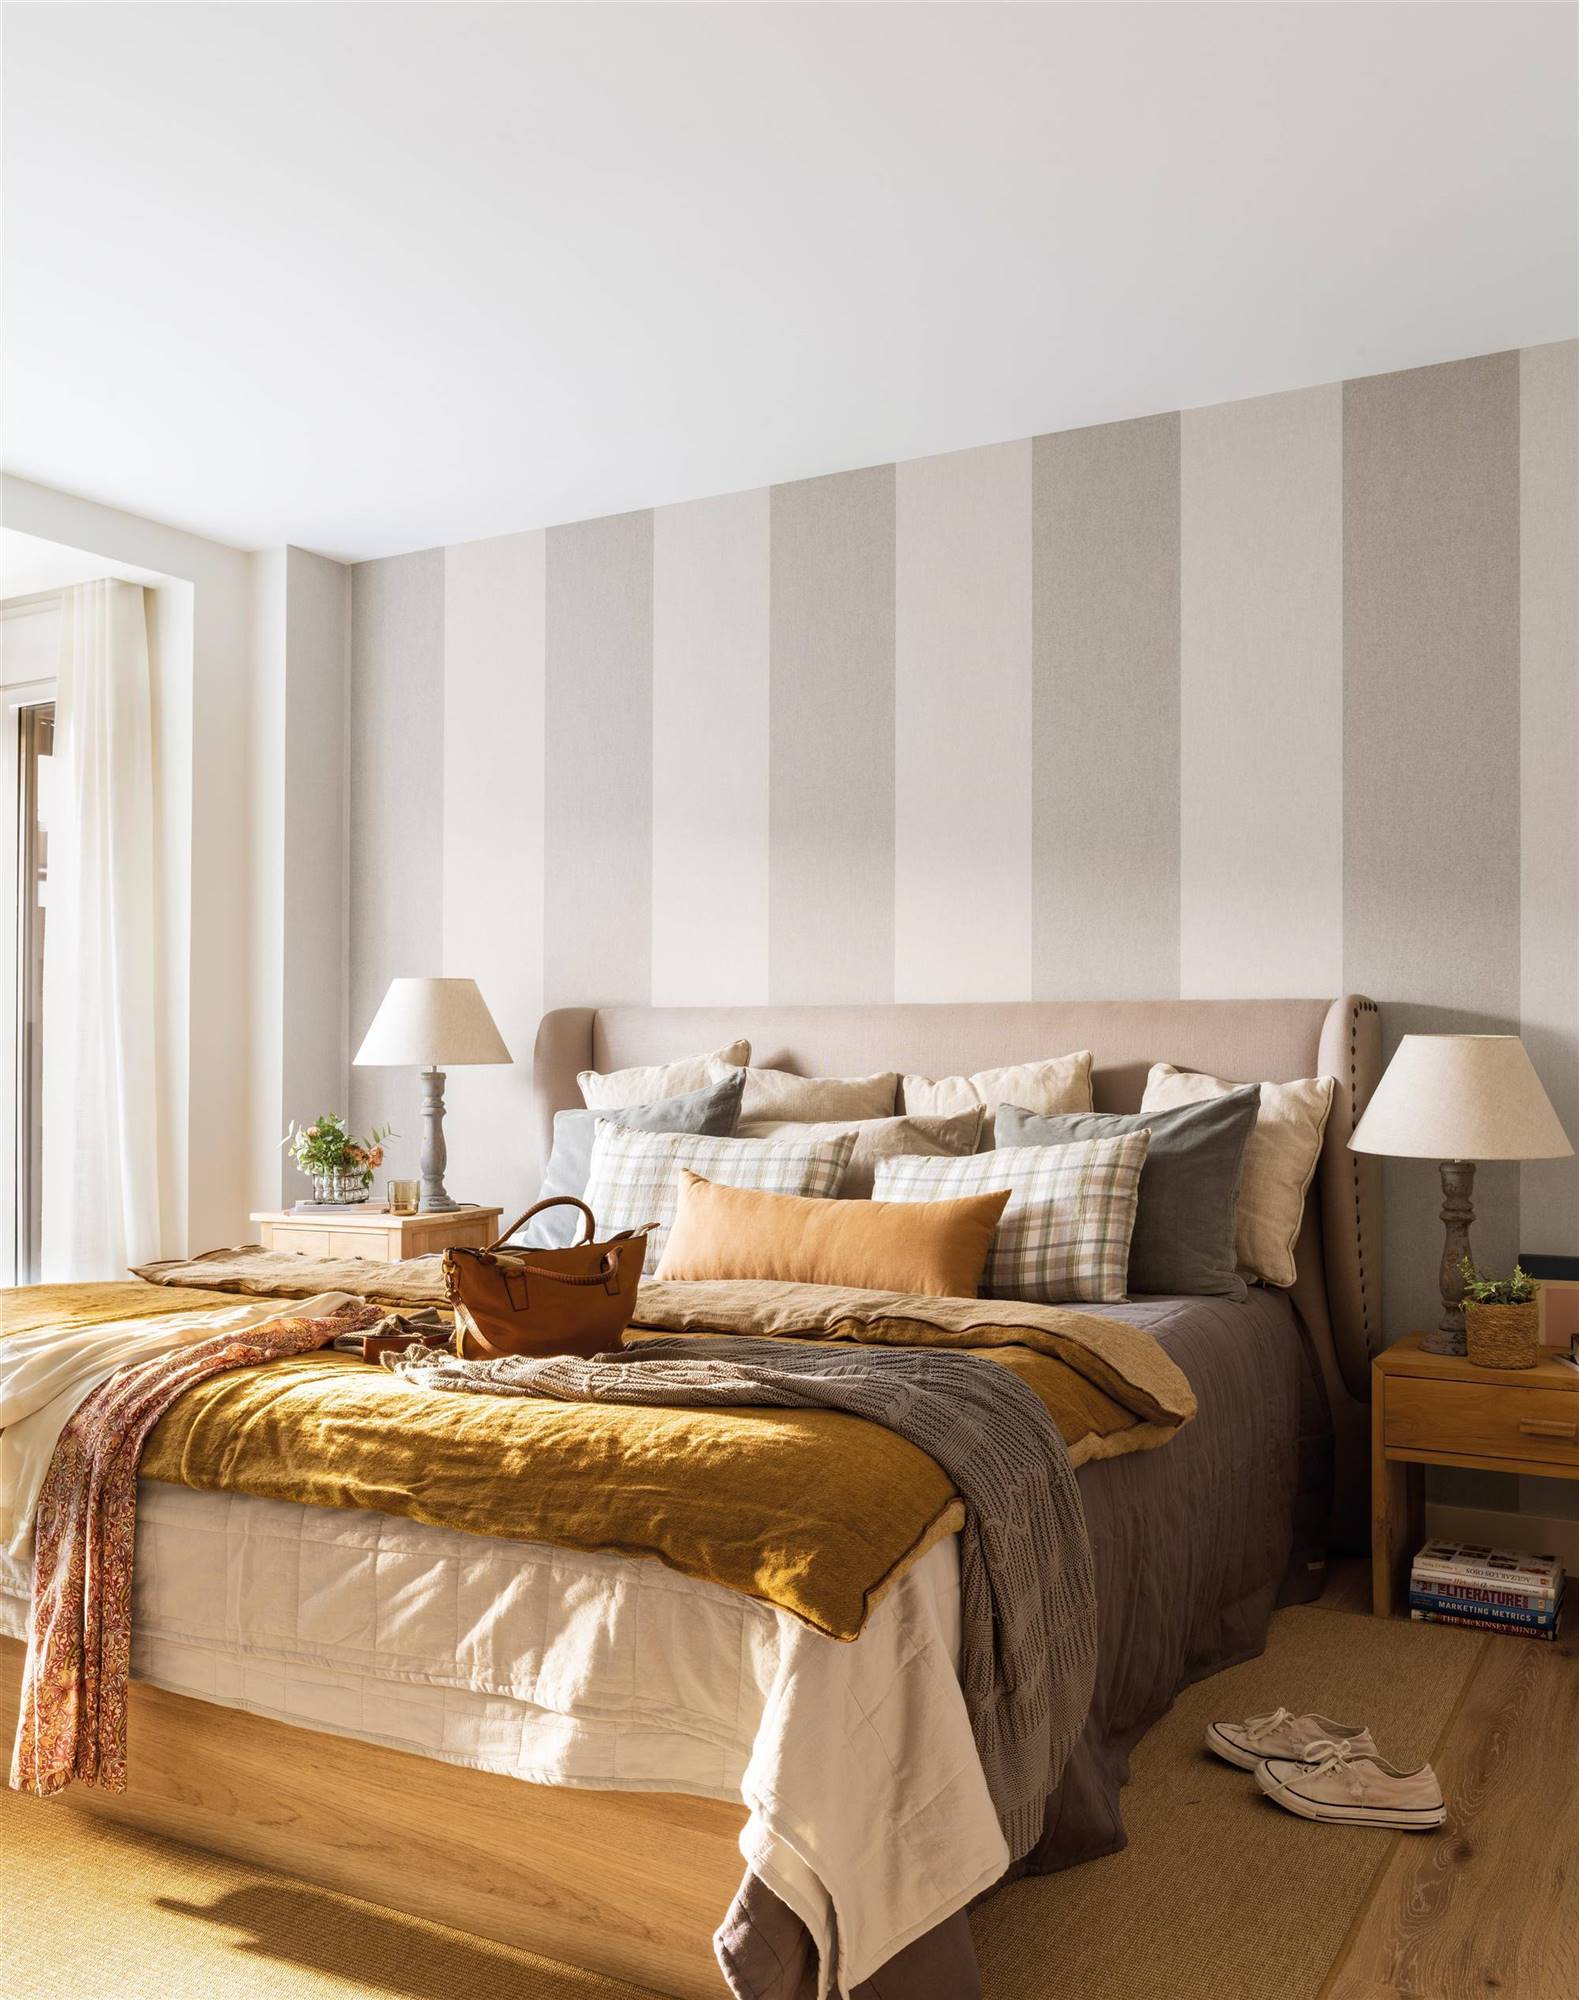 Dormitorio con papel pintado de rayas.  